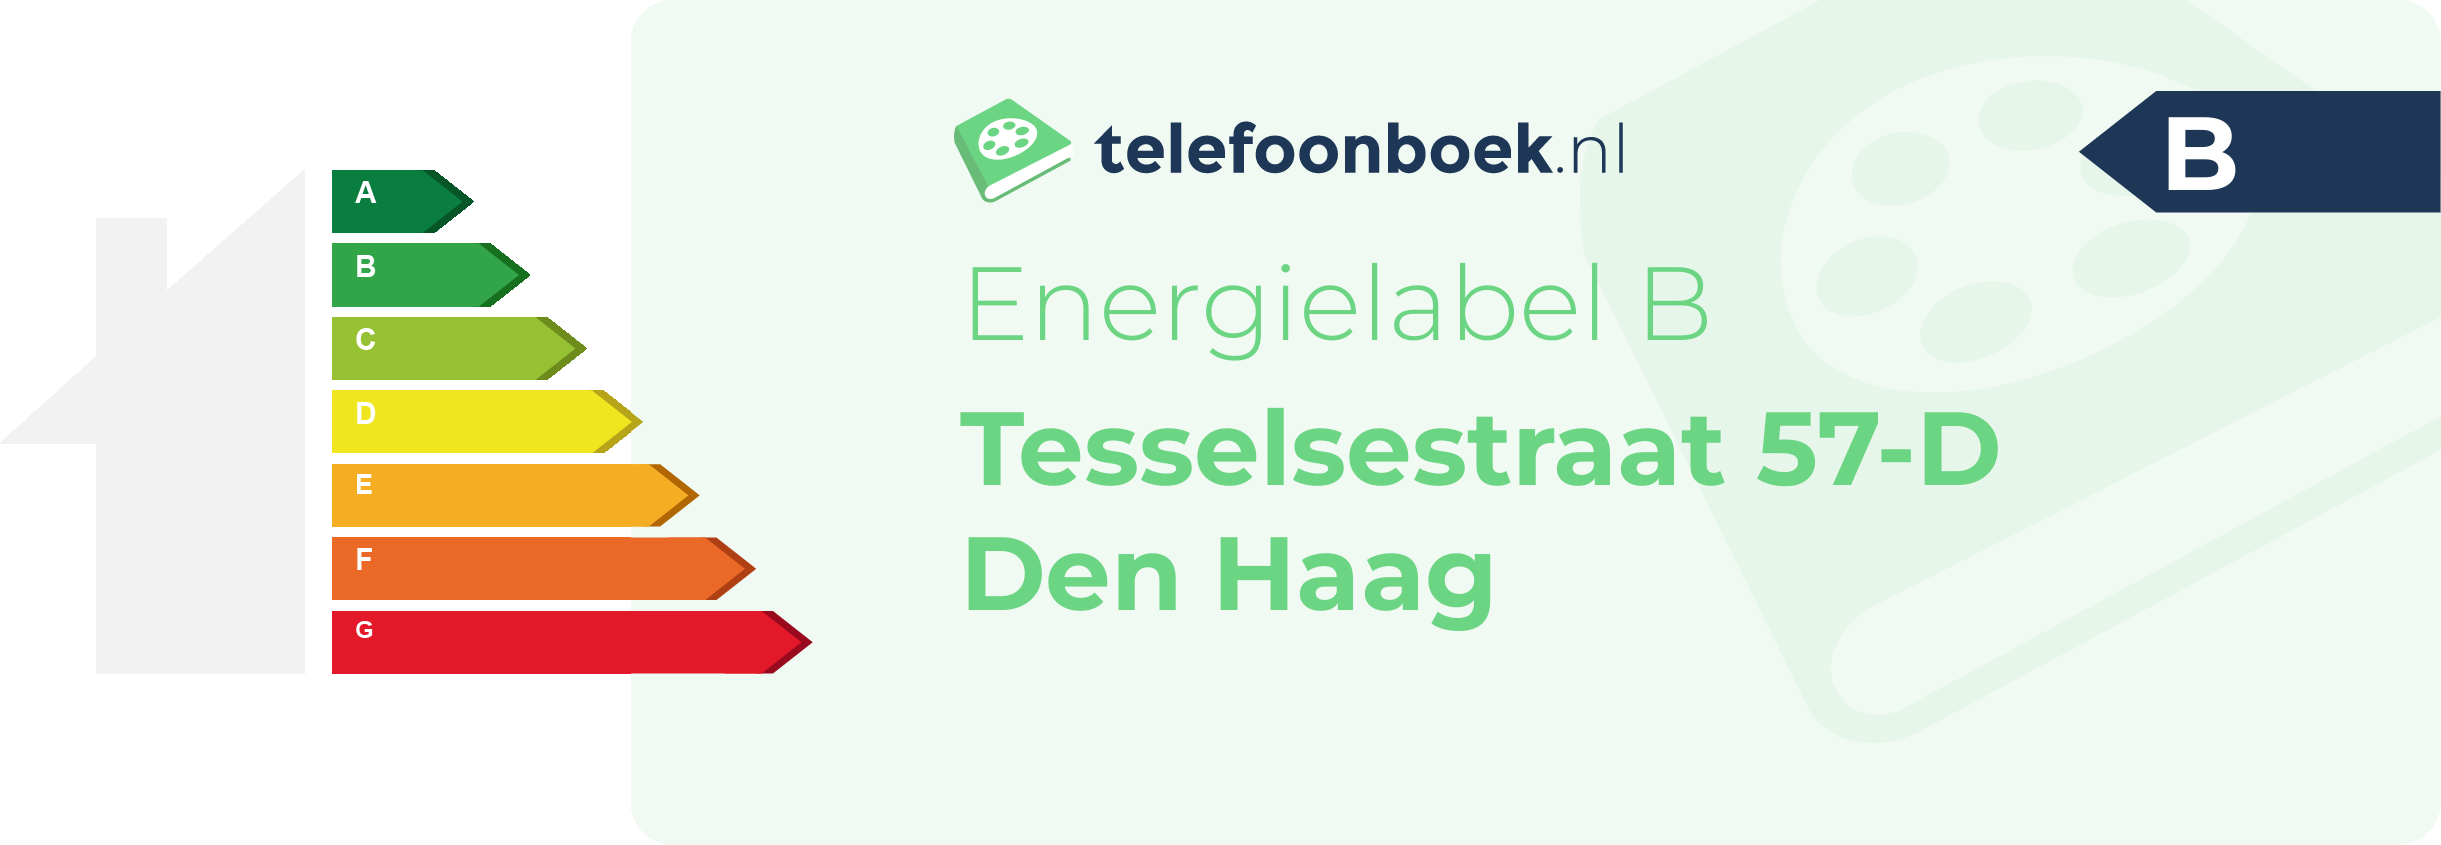 Energielabel Tesselsestraat 57-D Den Haag